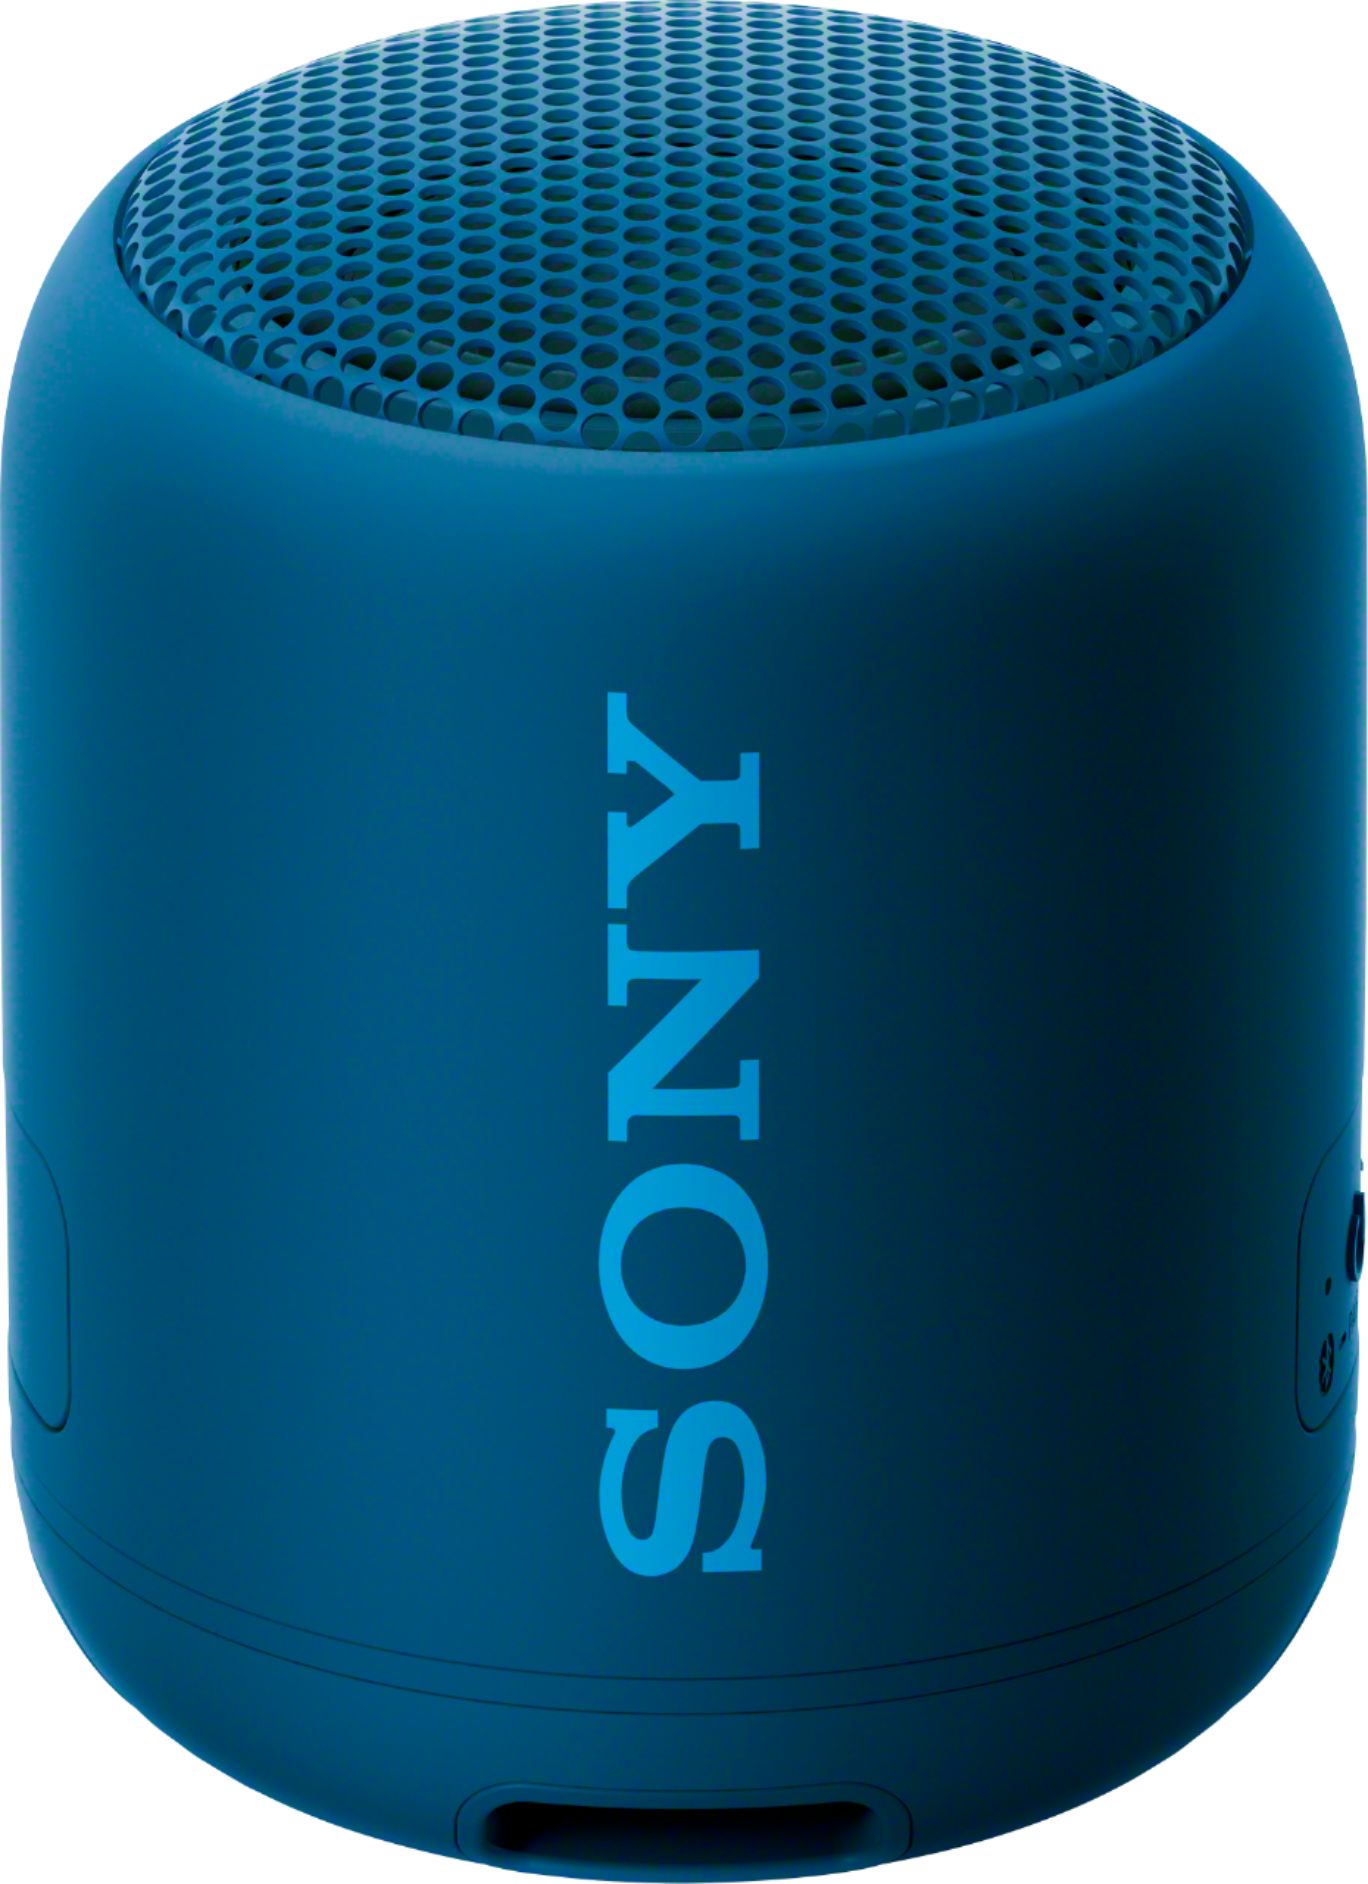 sony compatible wireless speakers